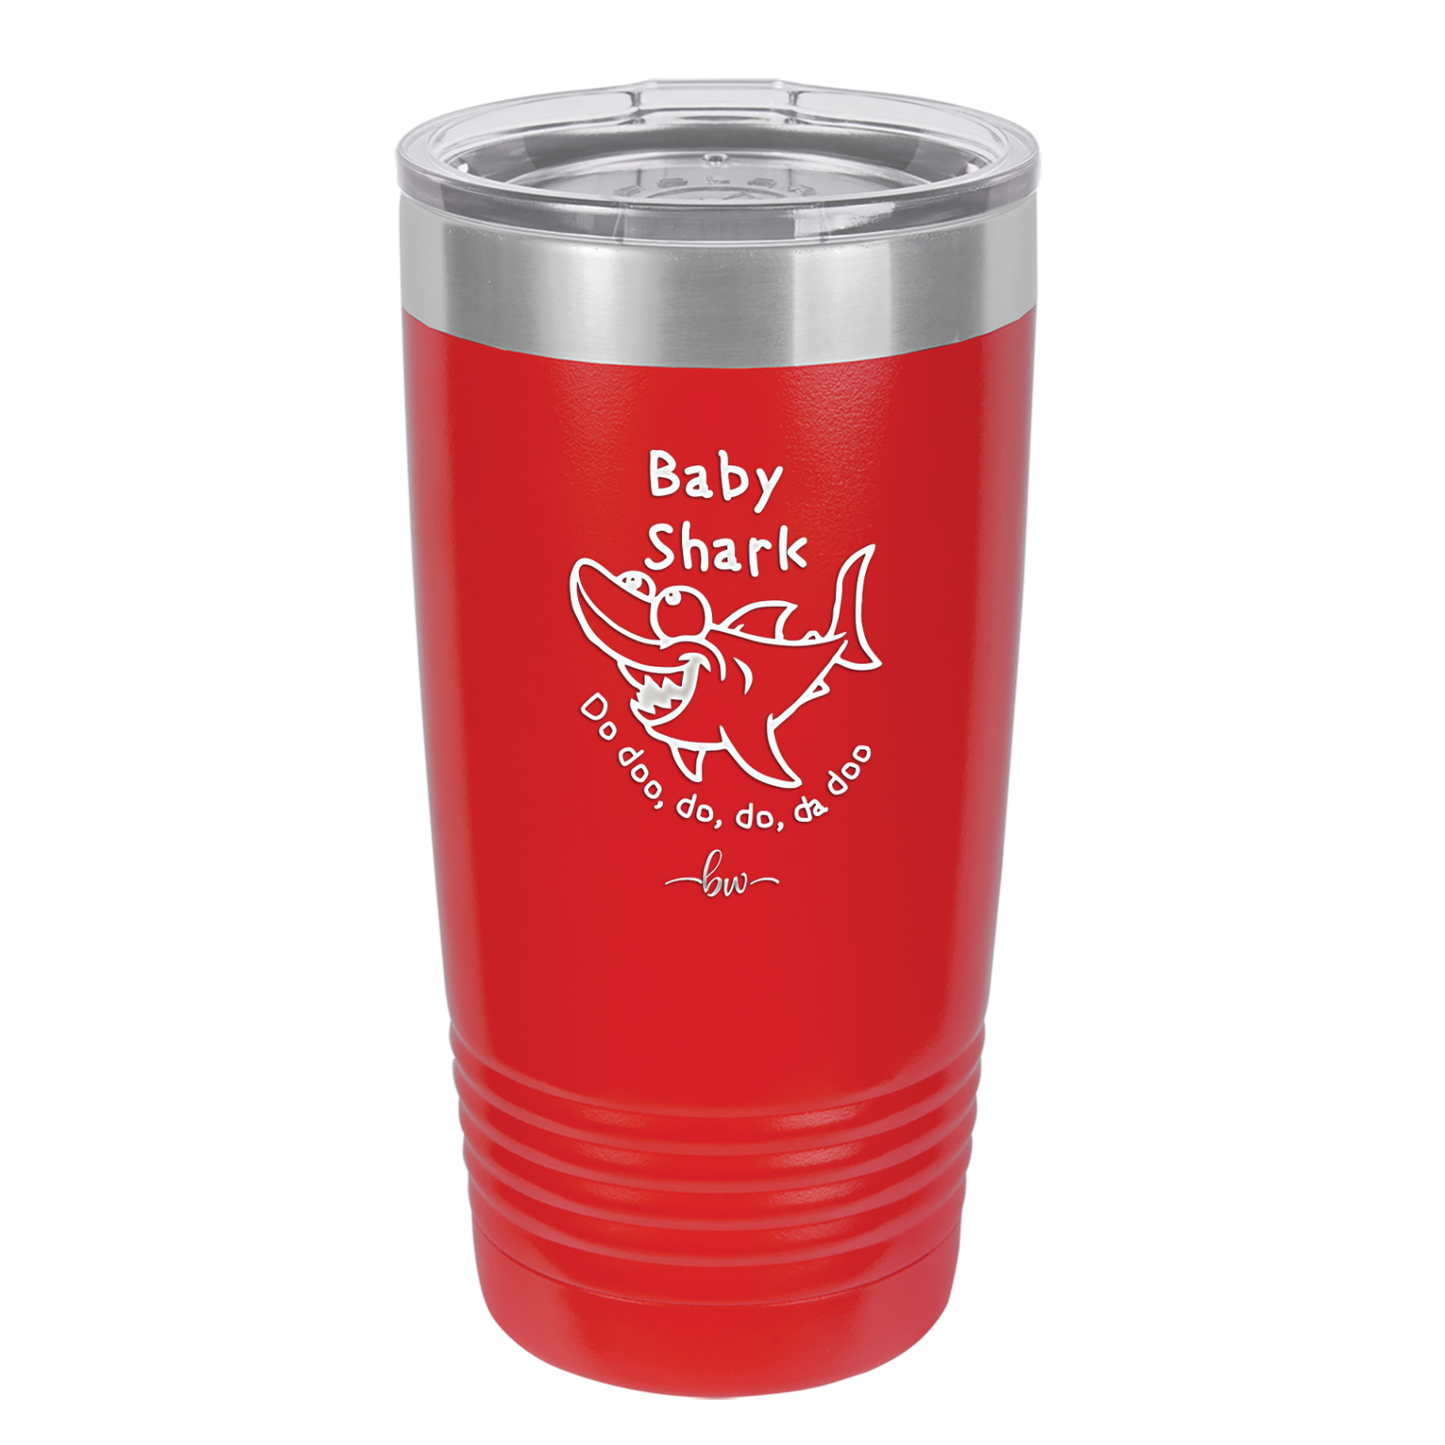 Baby Shark - Laser Engraved Stainless Steel Drinkware - 1088 -